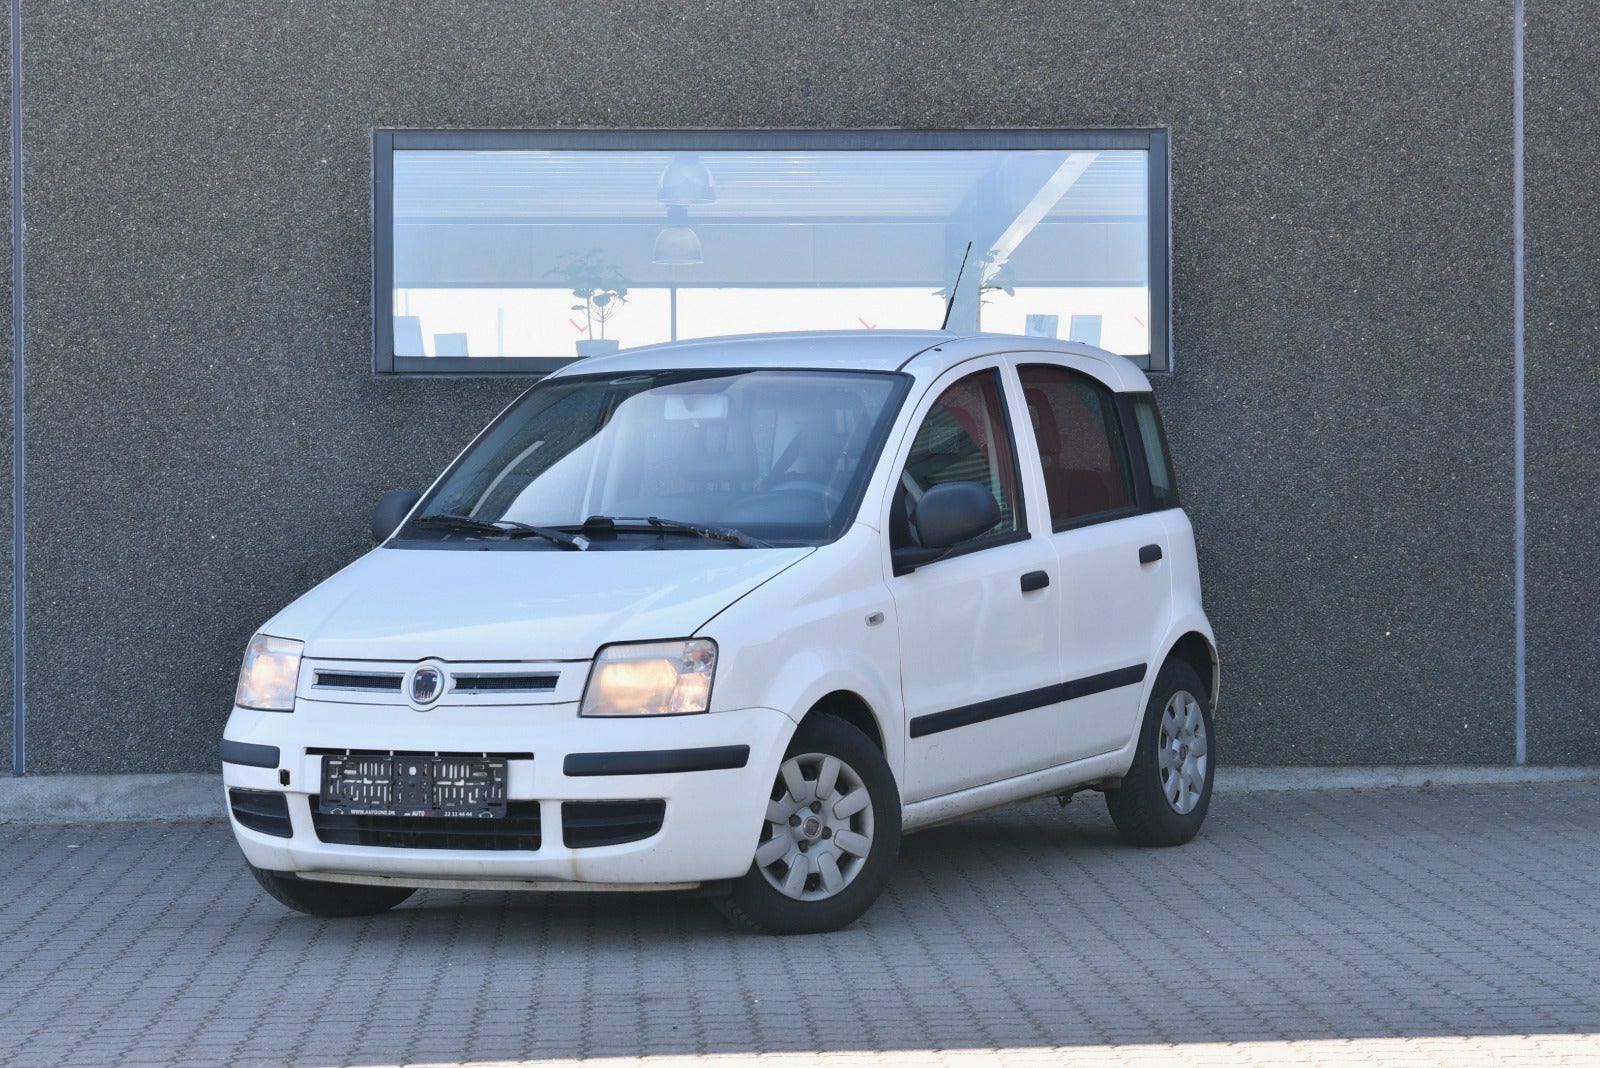 Fiat Panda 1,2 69 Ciao Benzin modelår 2010 km 292000 Hvid ABS